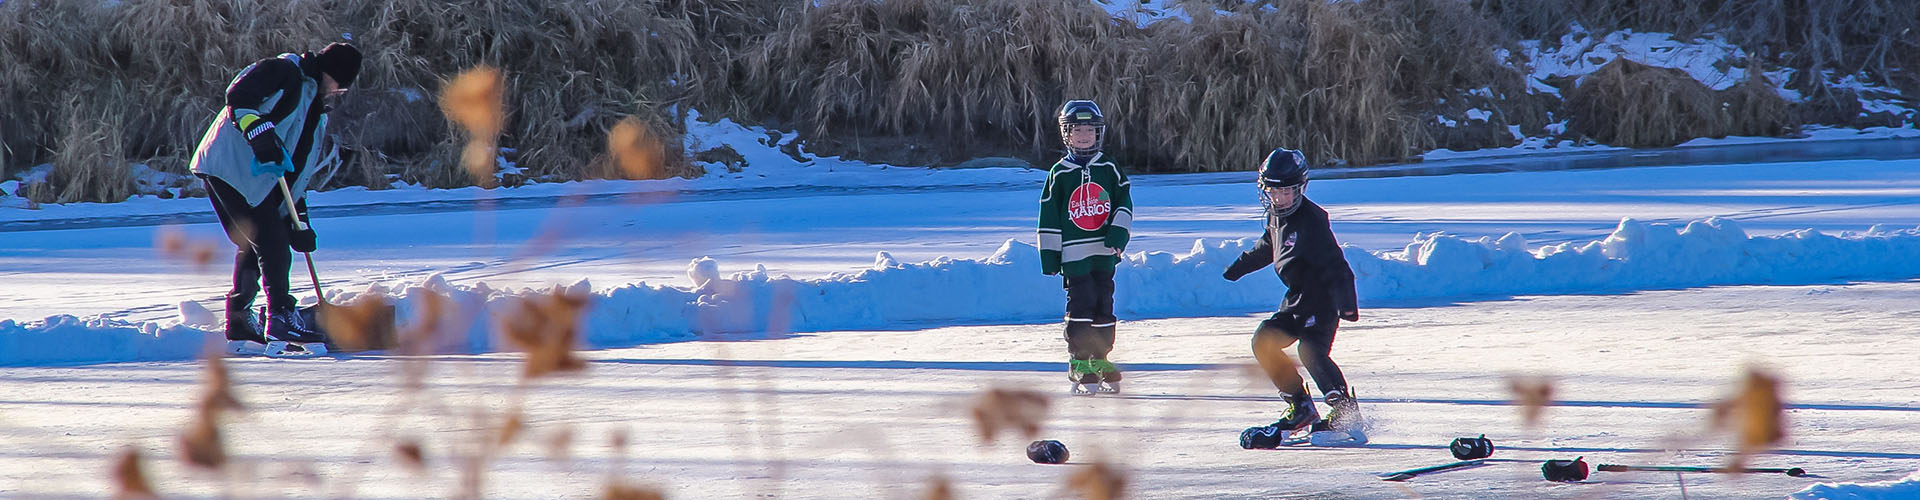 People playing pond hockey, Brandon, Manitoba